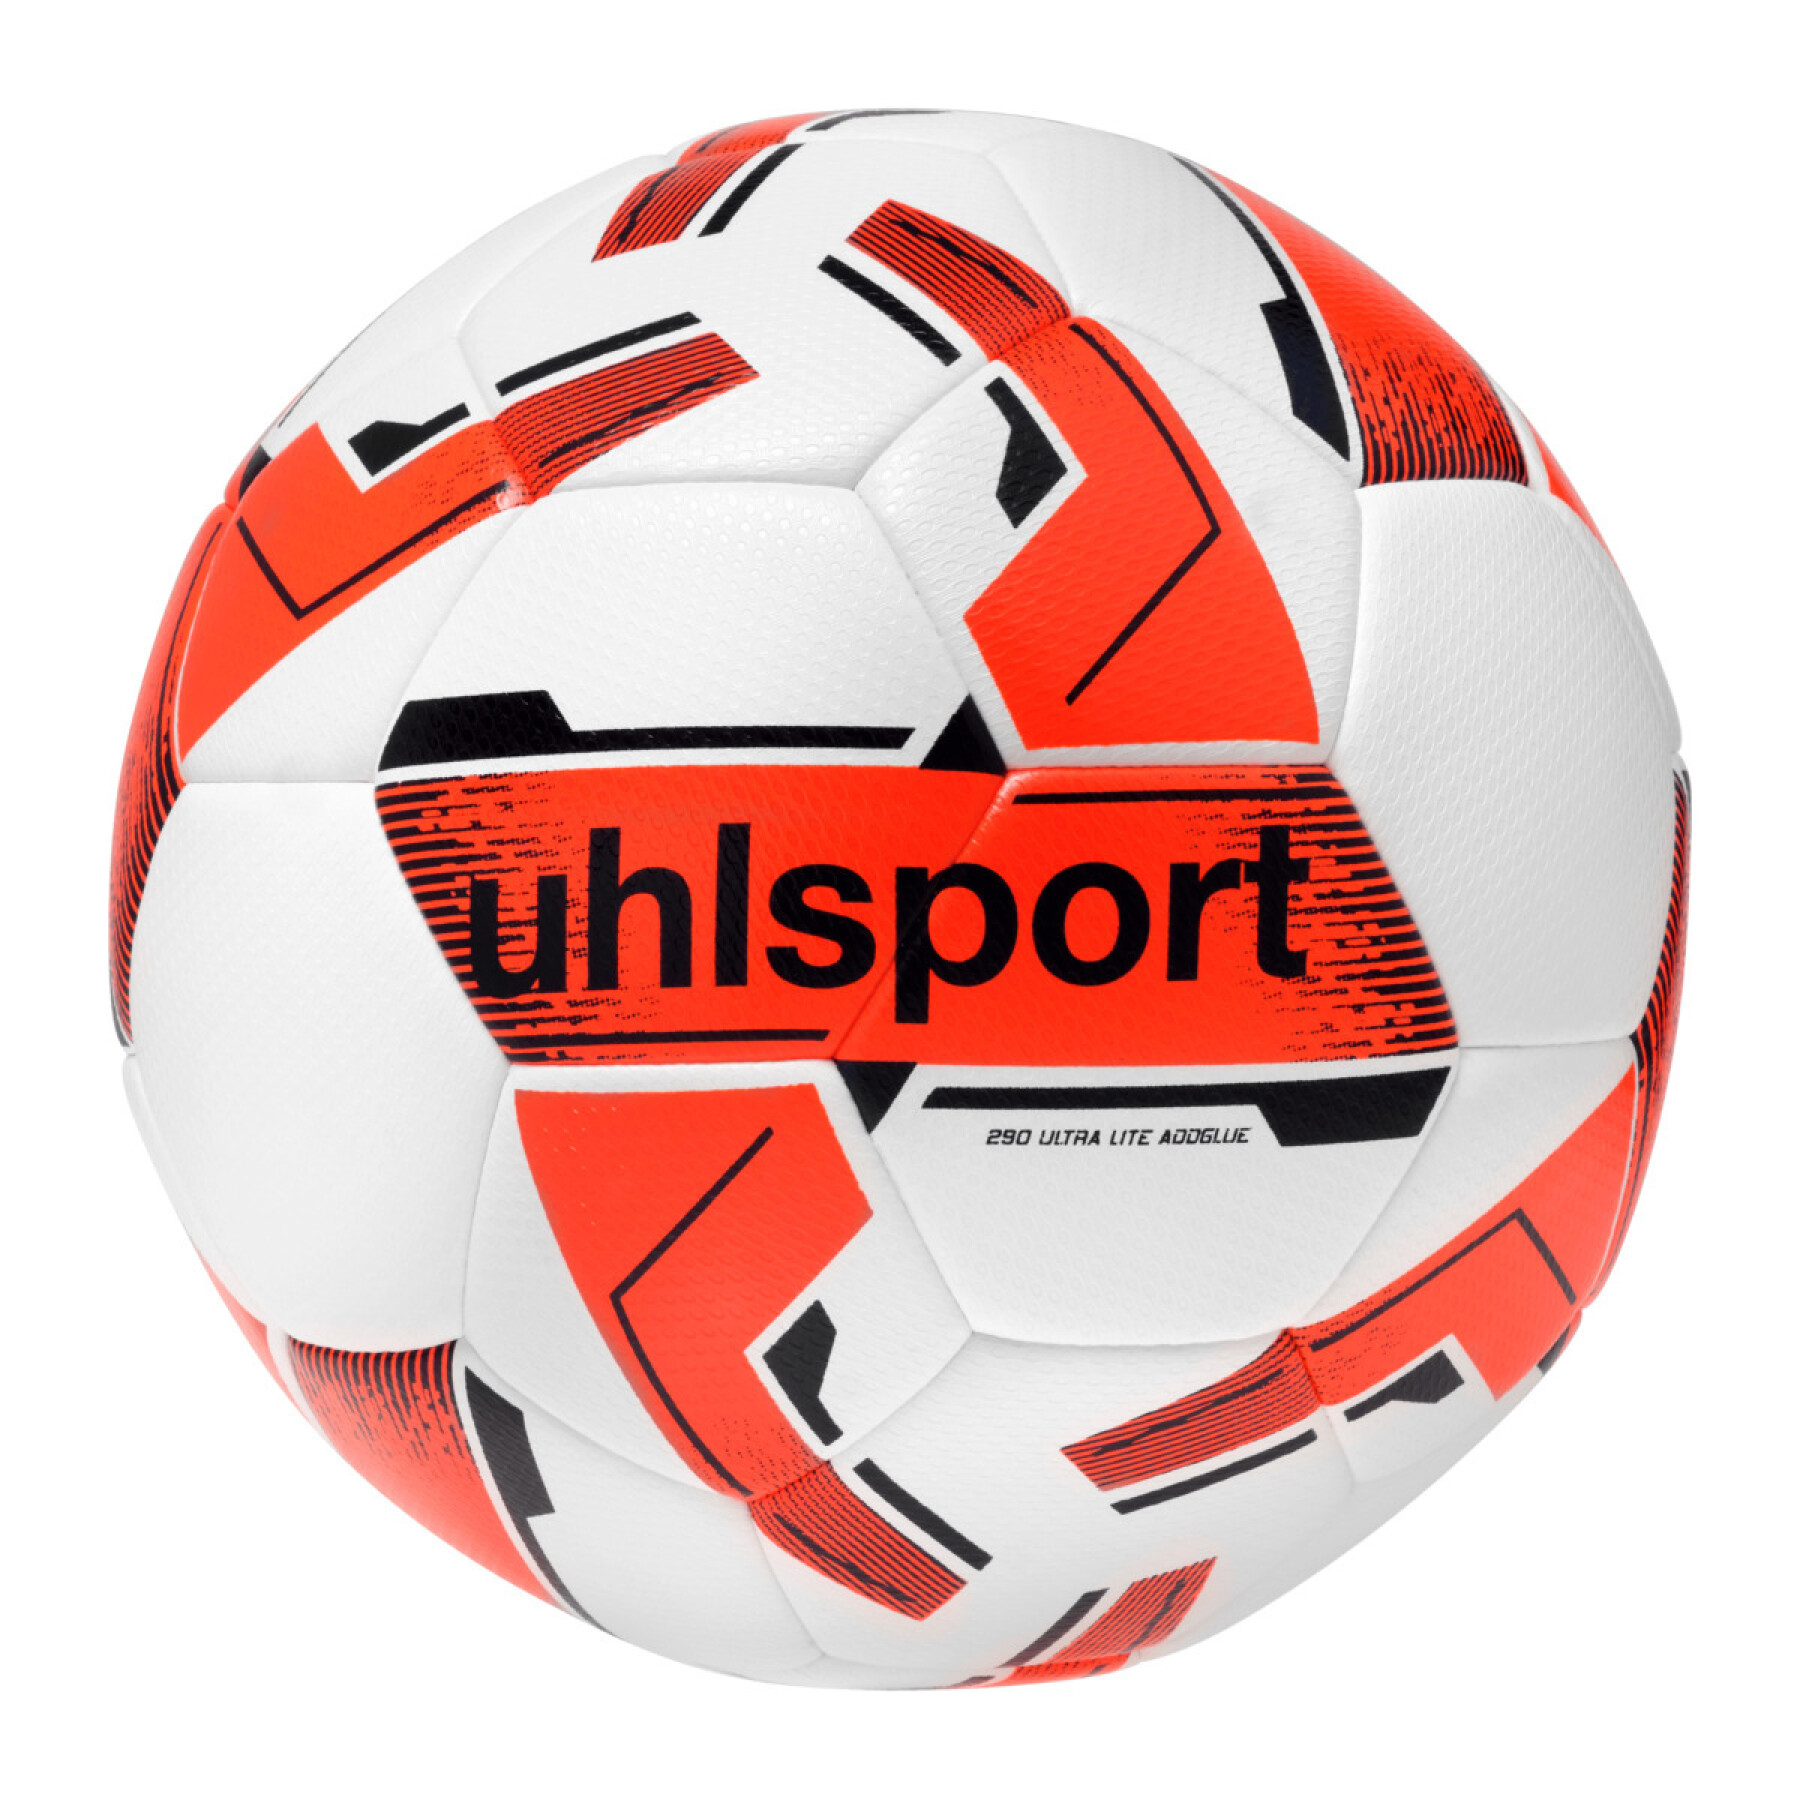 Palla per bambini Uhlsport 290 Ultra Lite Addglue